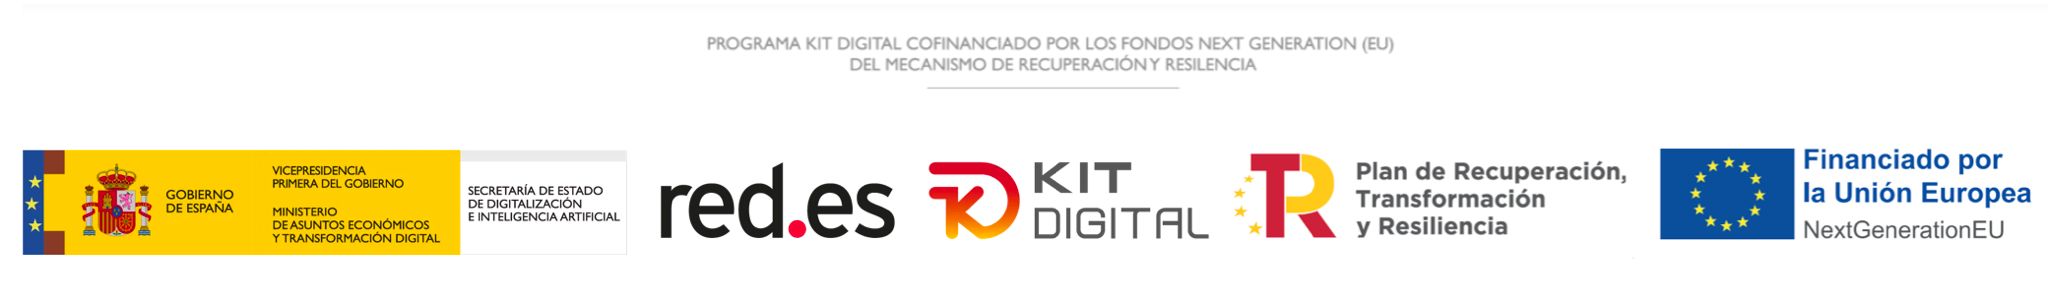 logos kit digital